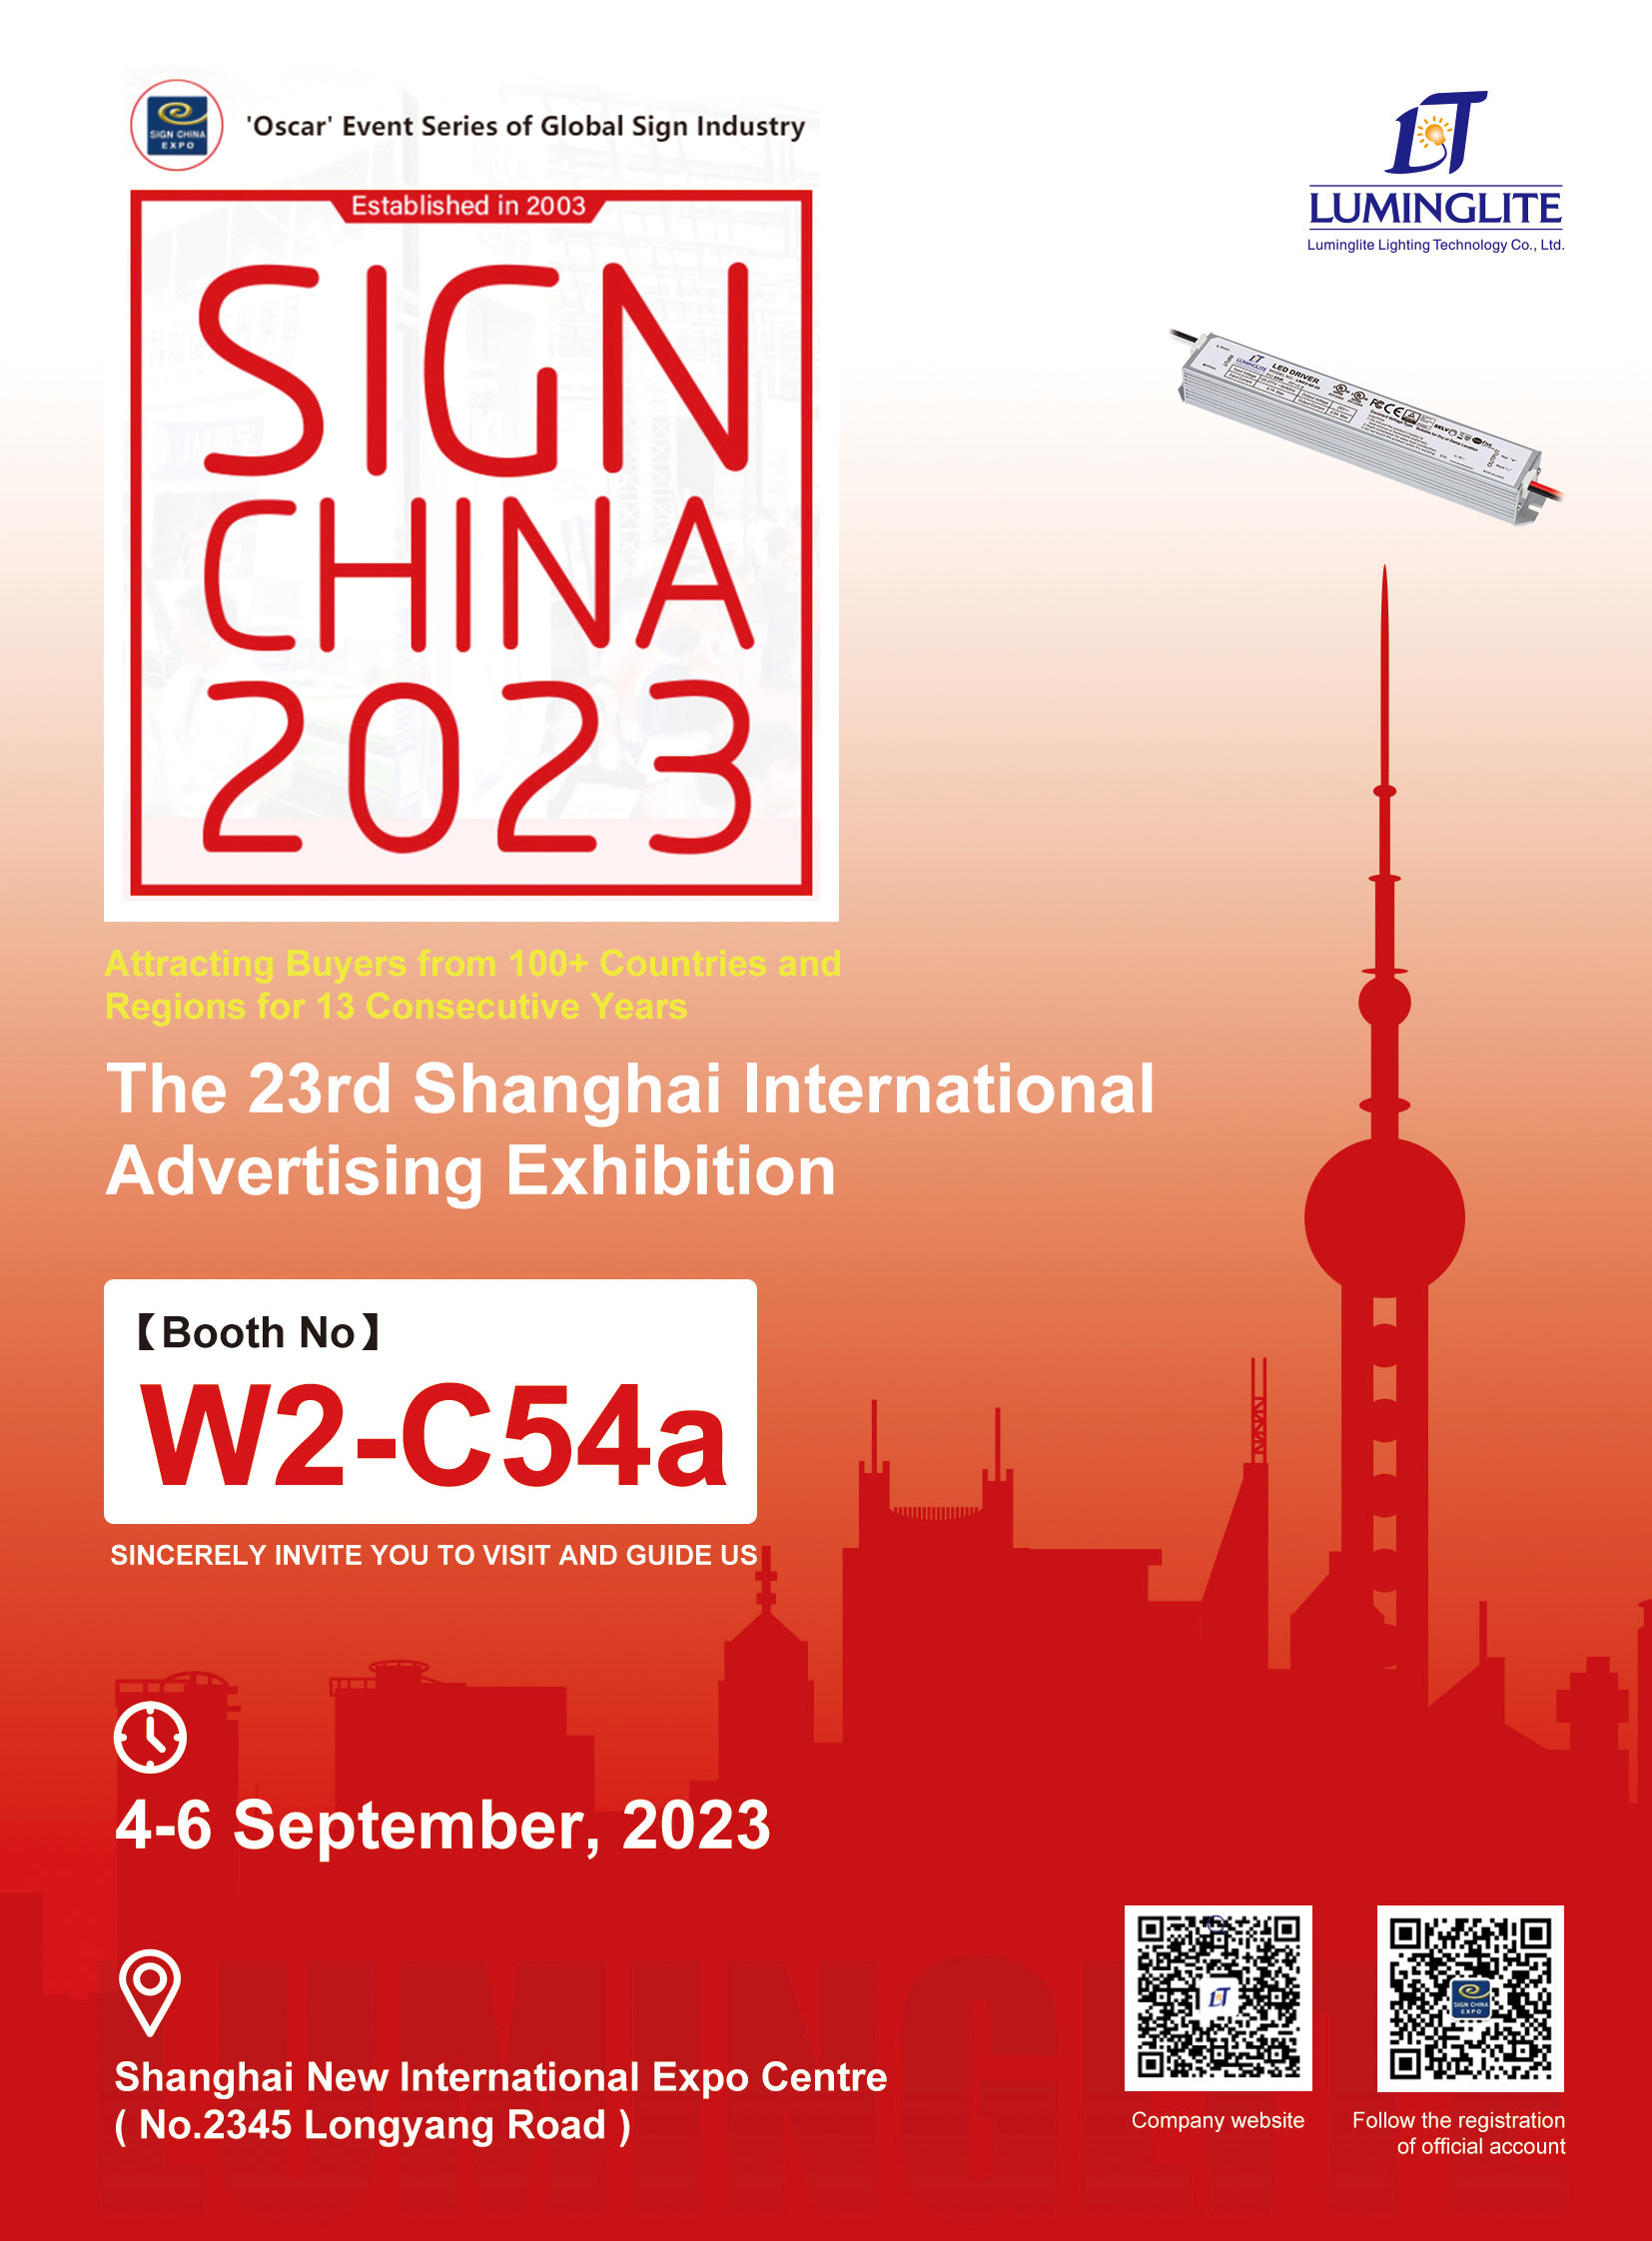 The 23rd Shanghai International Advertising Exhibition